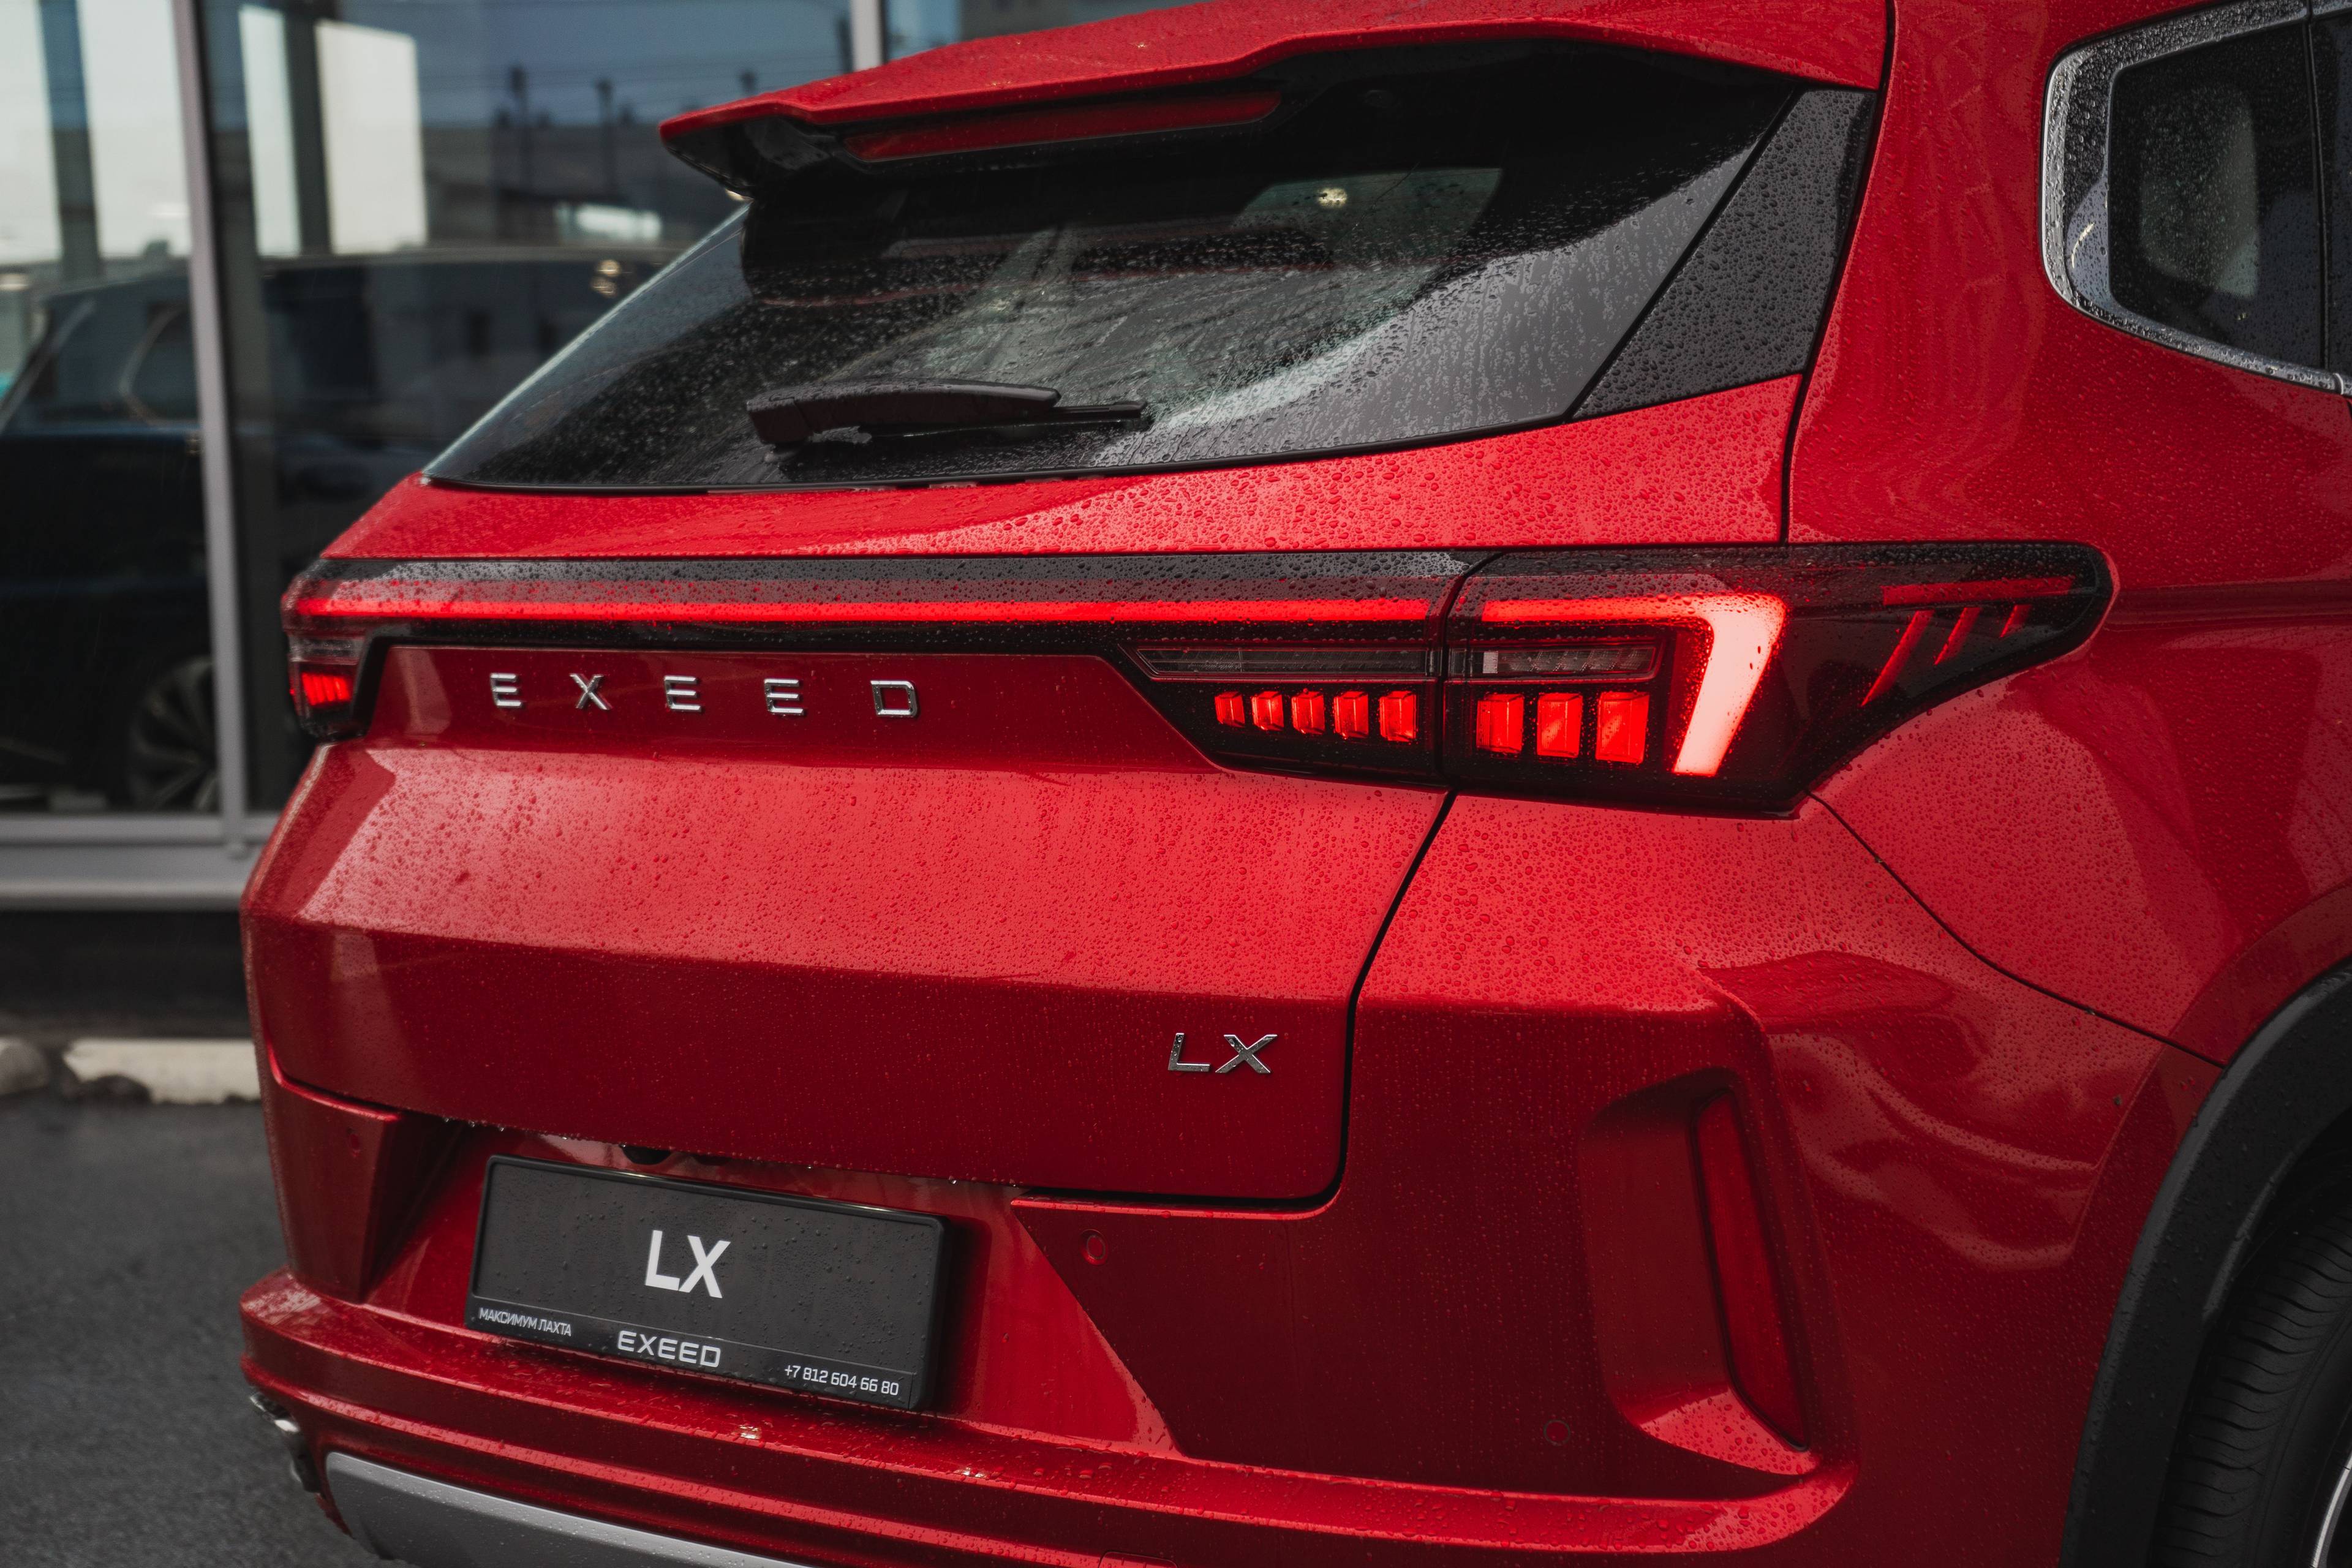 EXEED LX Premium Plus 1.6T 7DCT AWD